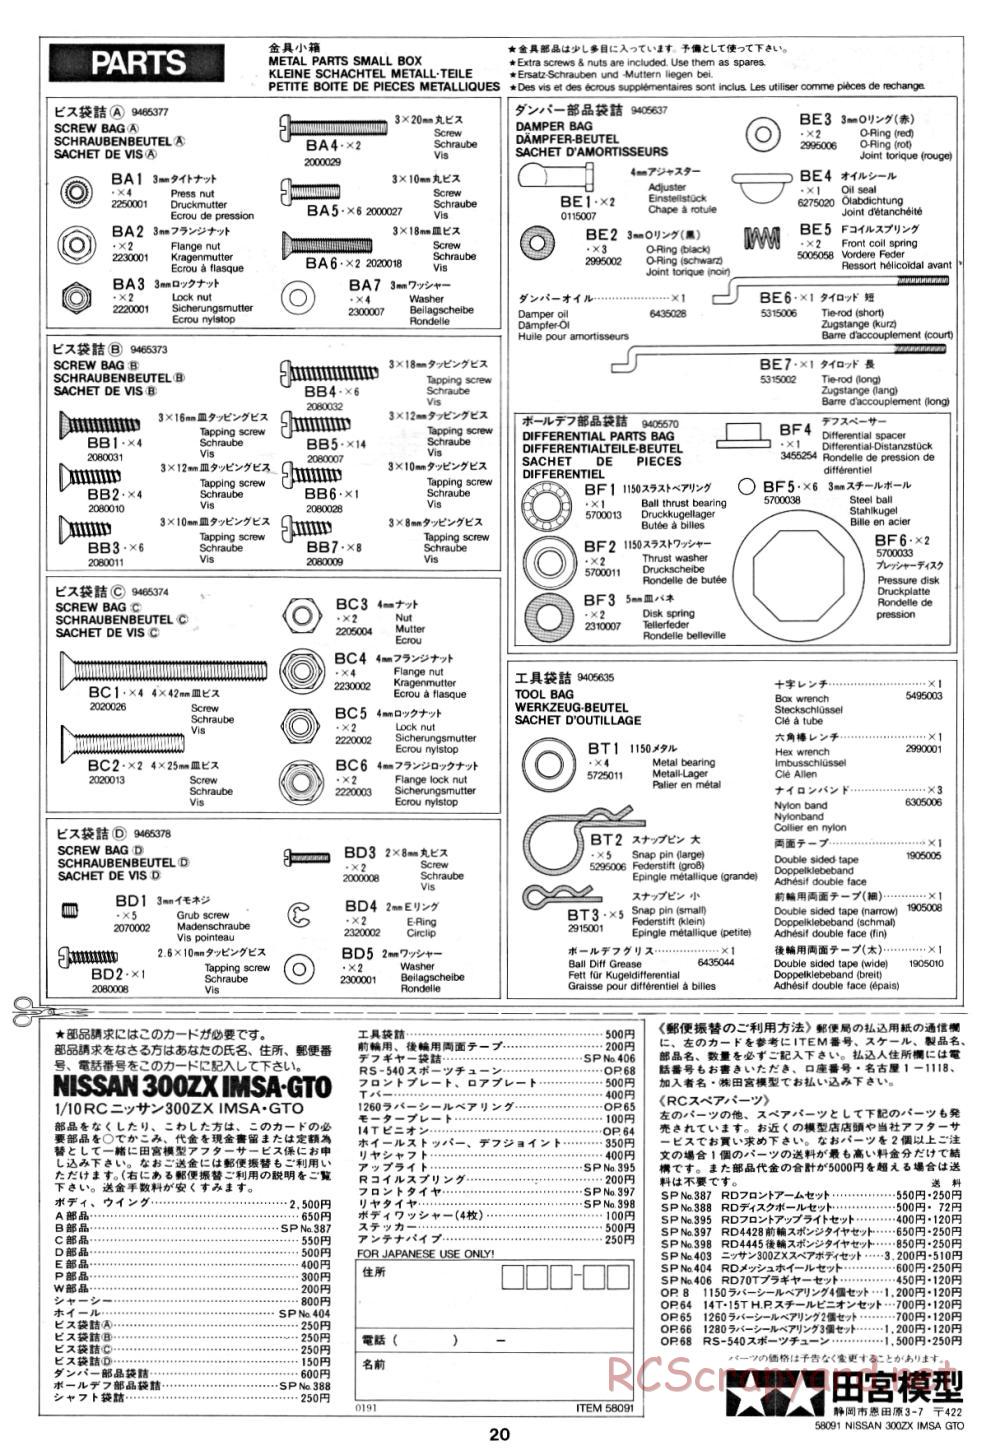 Tamiya - Nissan 300ZX IMSA GTO - 58091 - Manual - Page 20